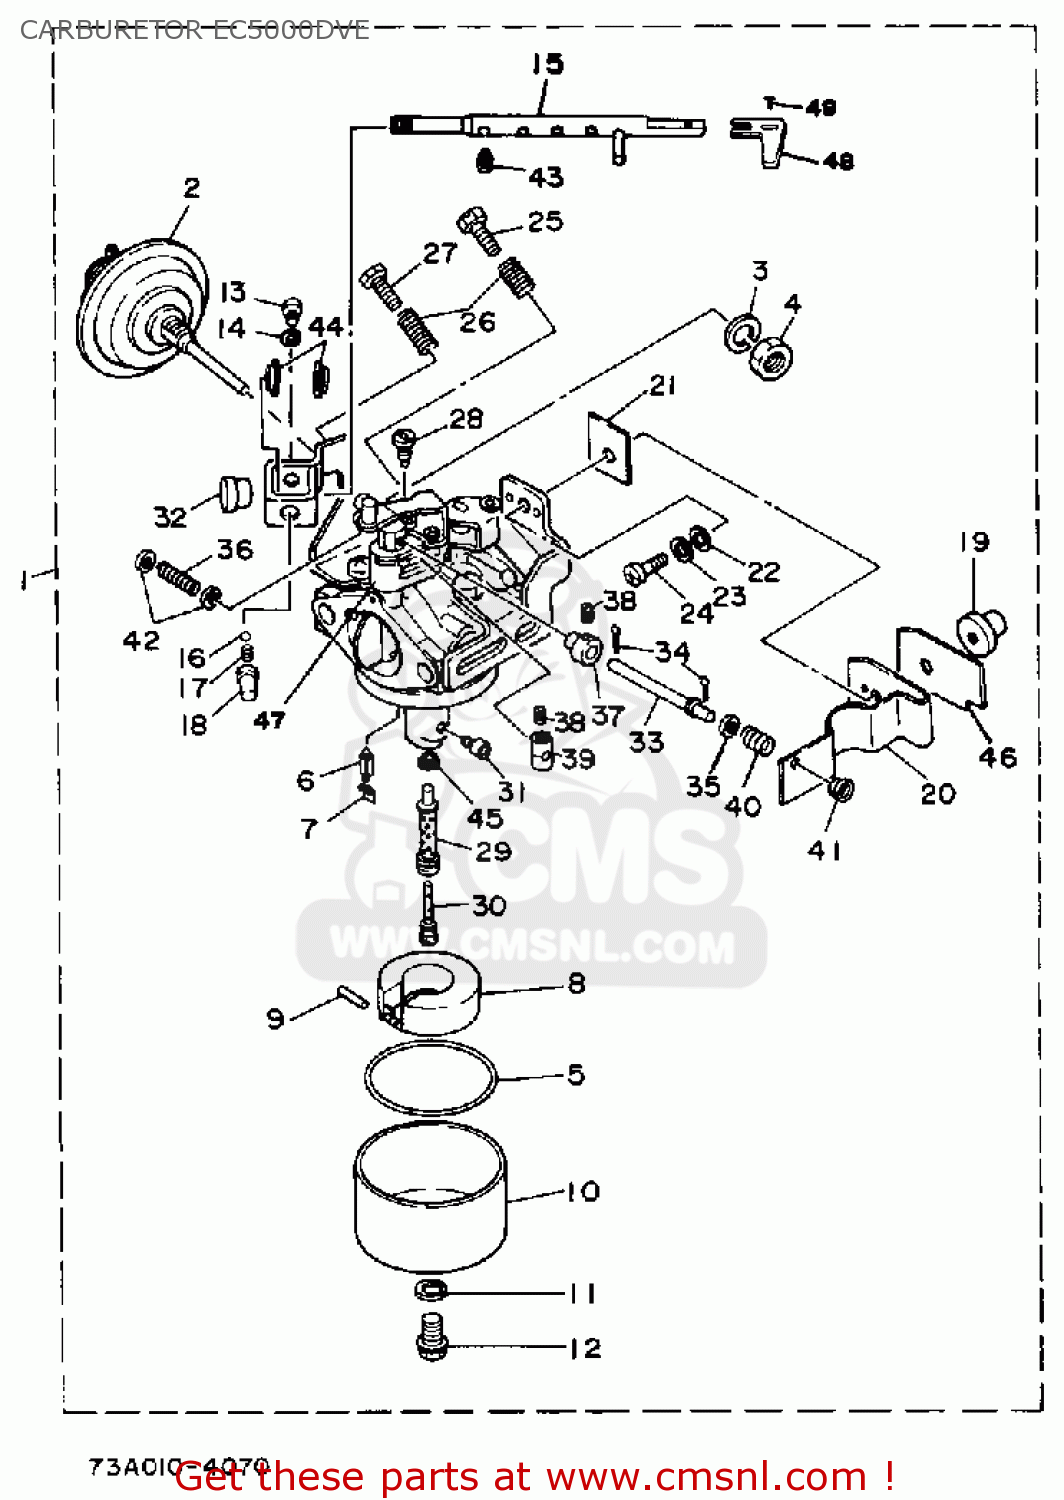 Ford f 150 carburetor diagram #2